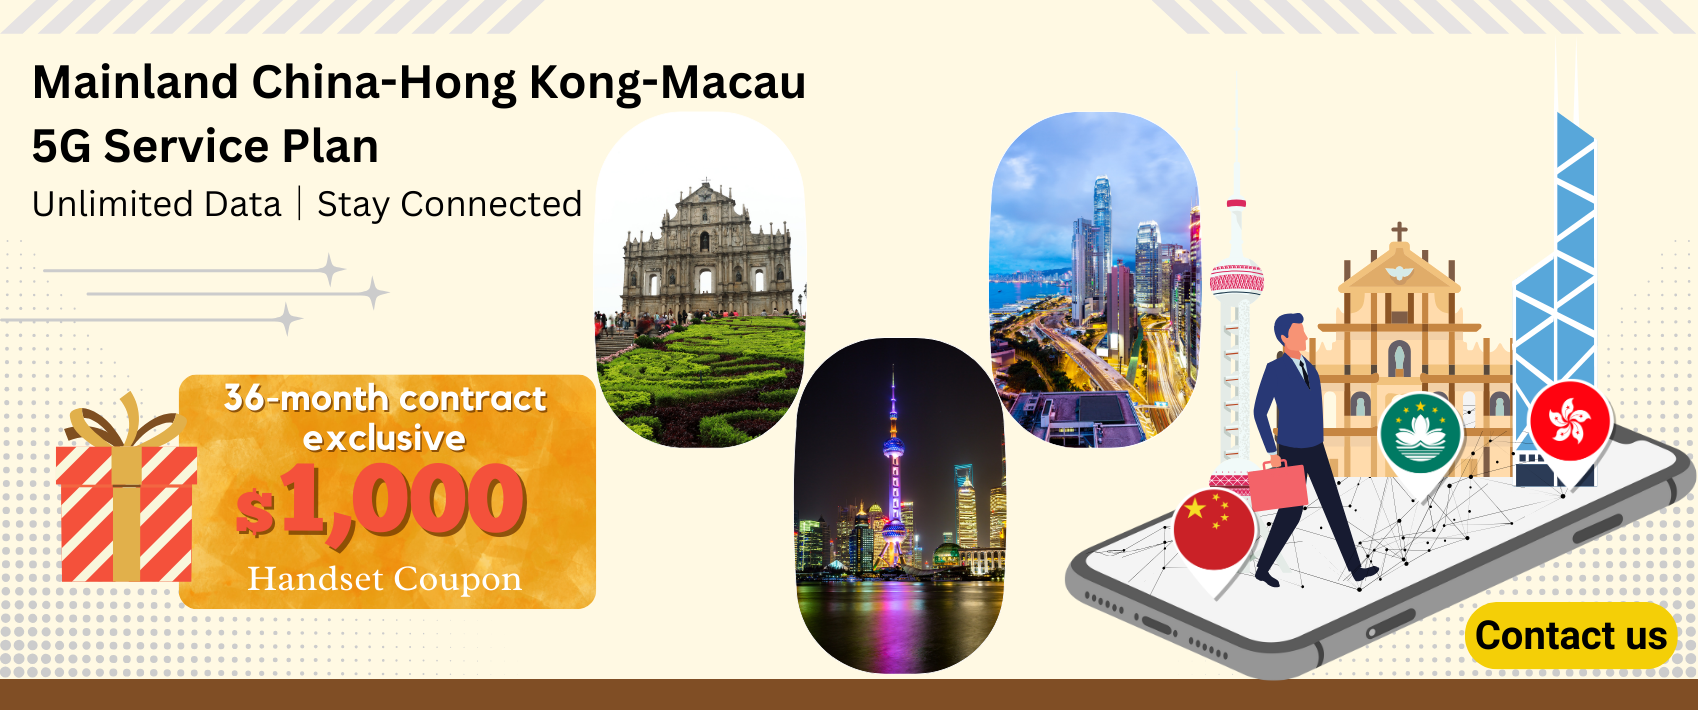 Mainland China-Hong Kong-Macau 5G Service Plan